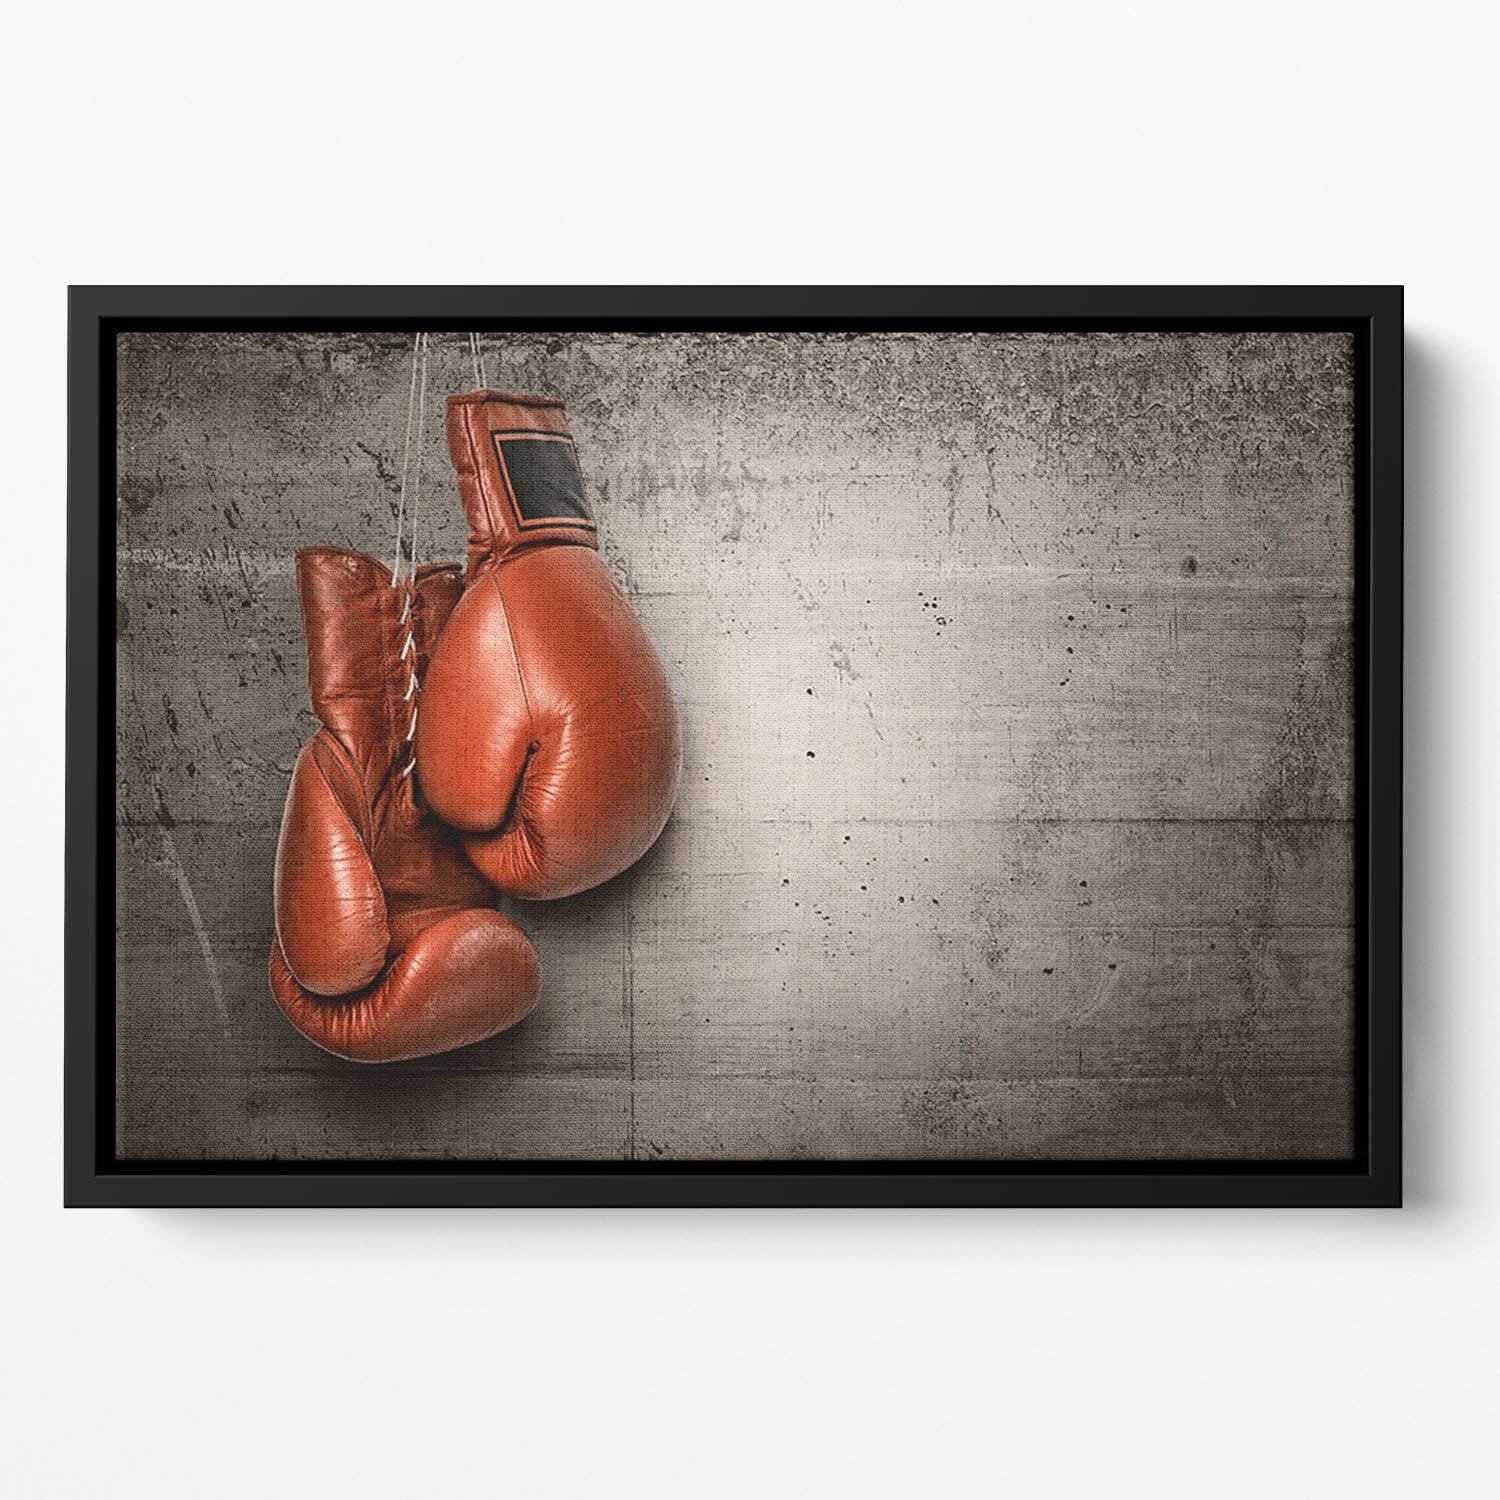 Boxing gloves hanging on concrete Floating Framed Canvas